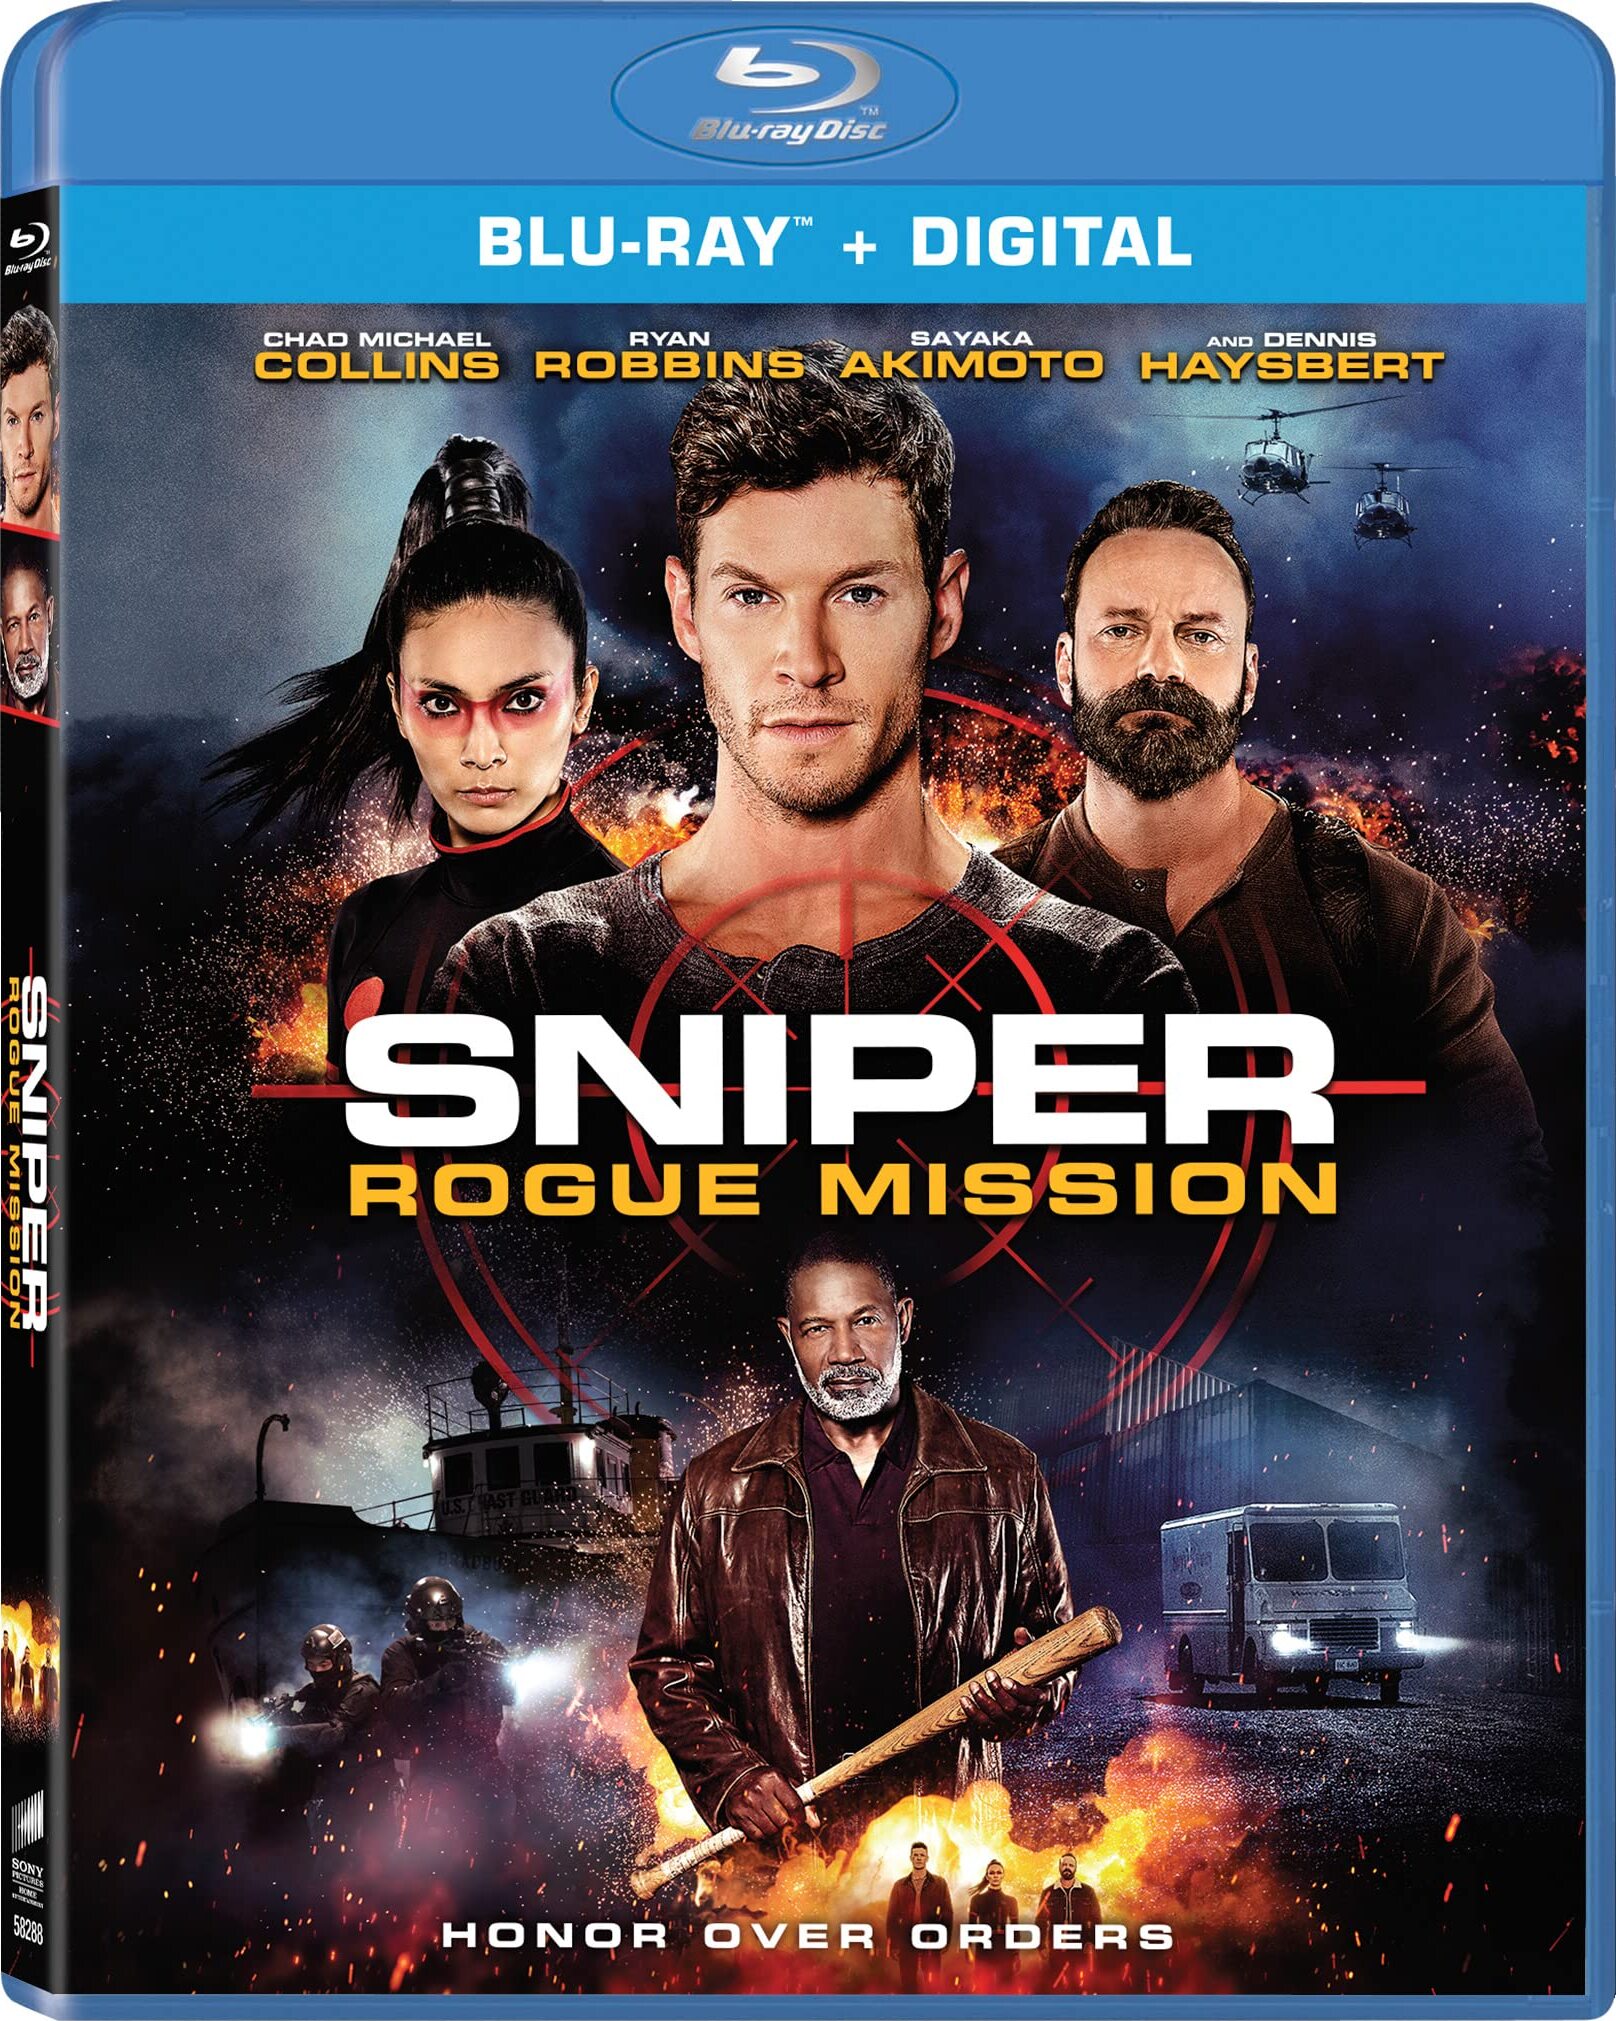 Sniper: Rogue Mission Blu-ray